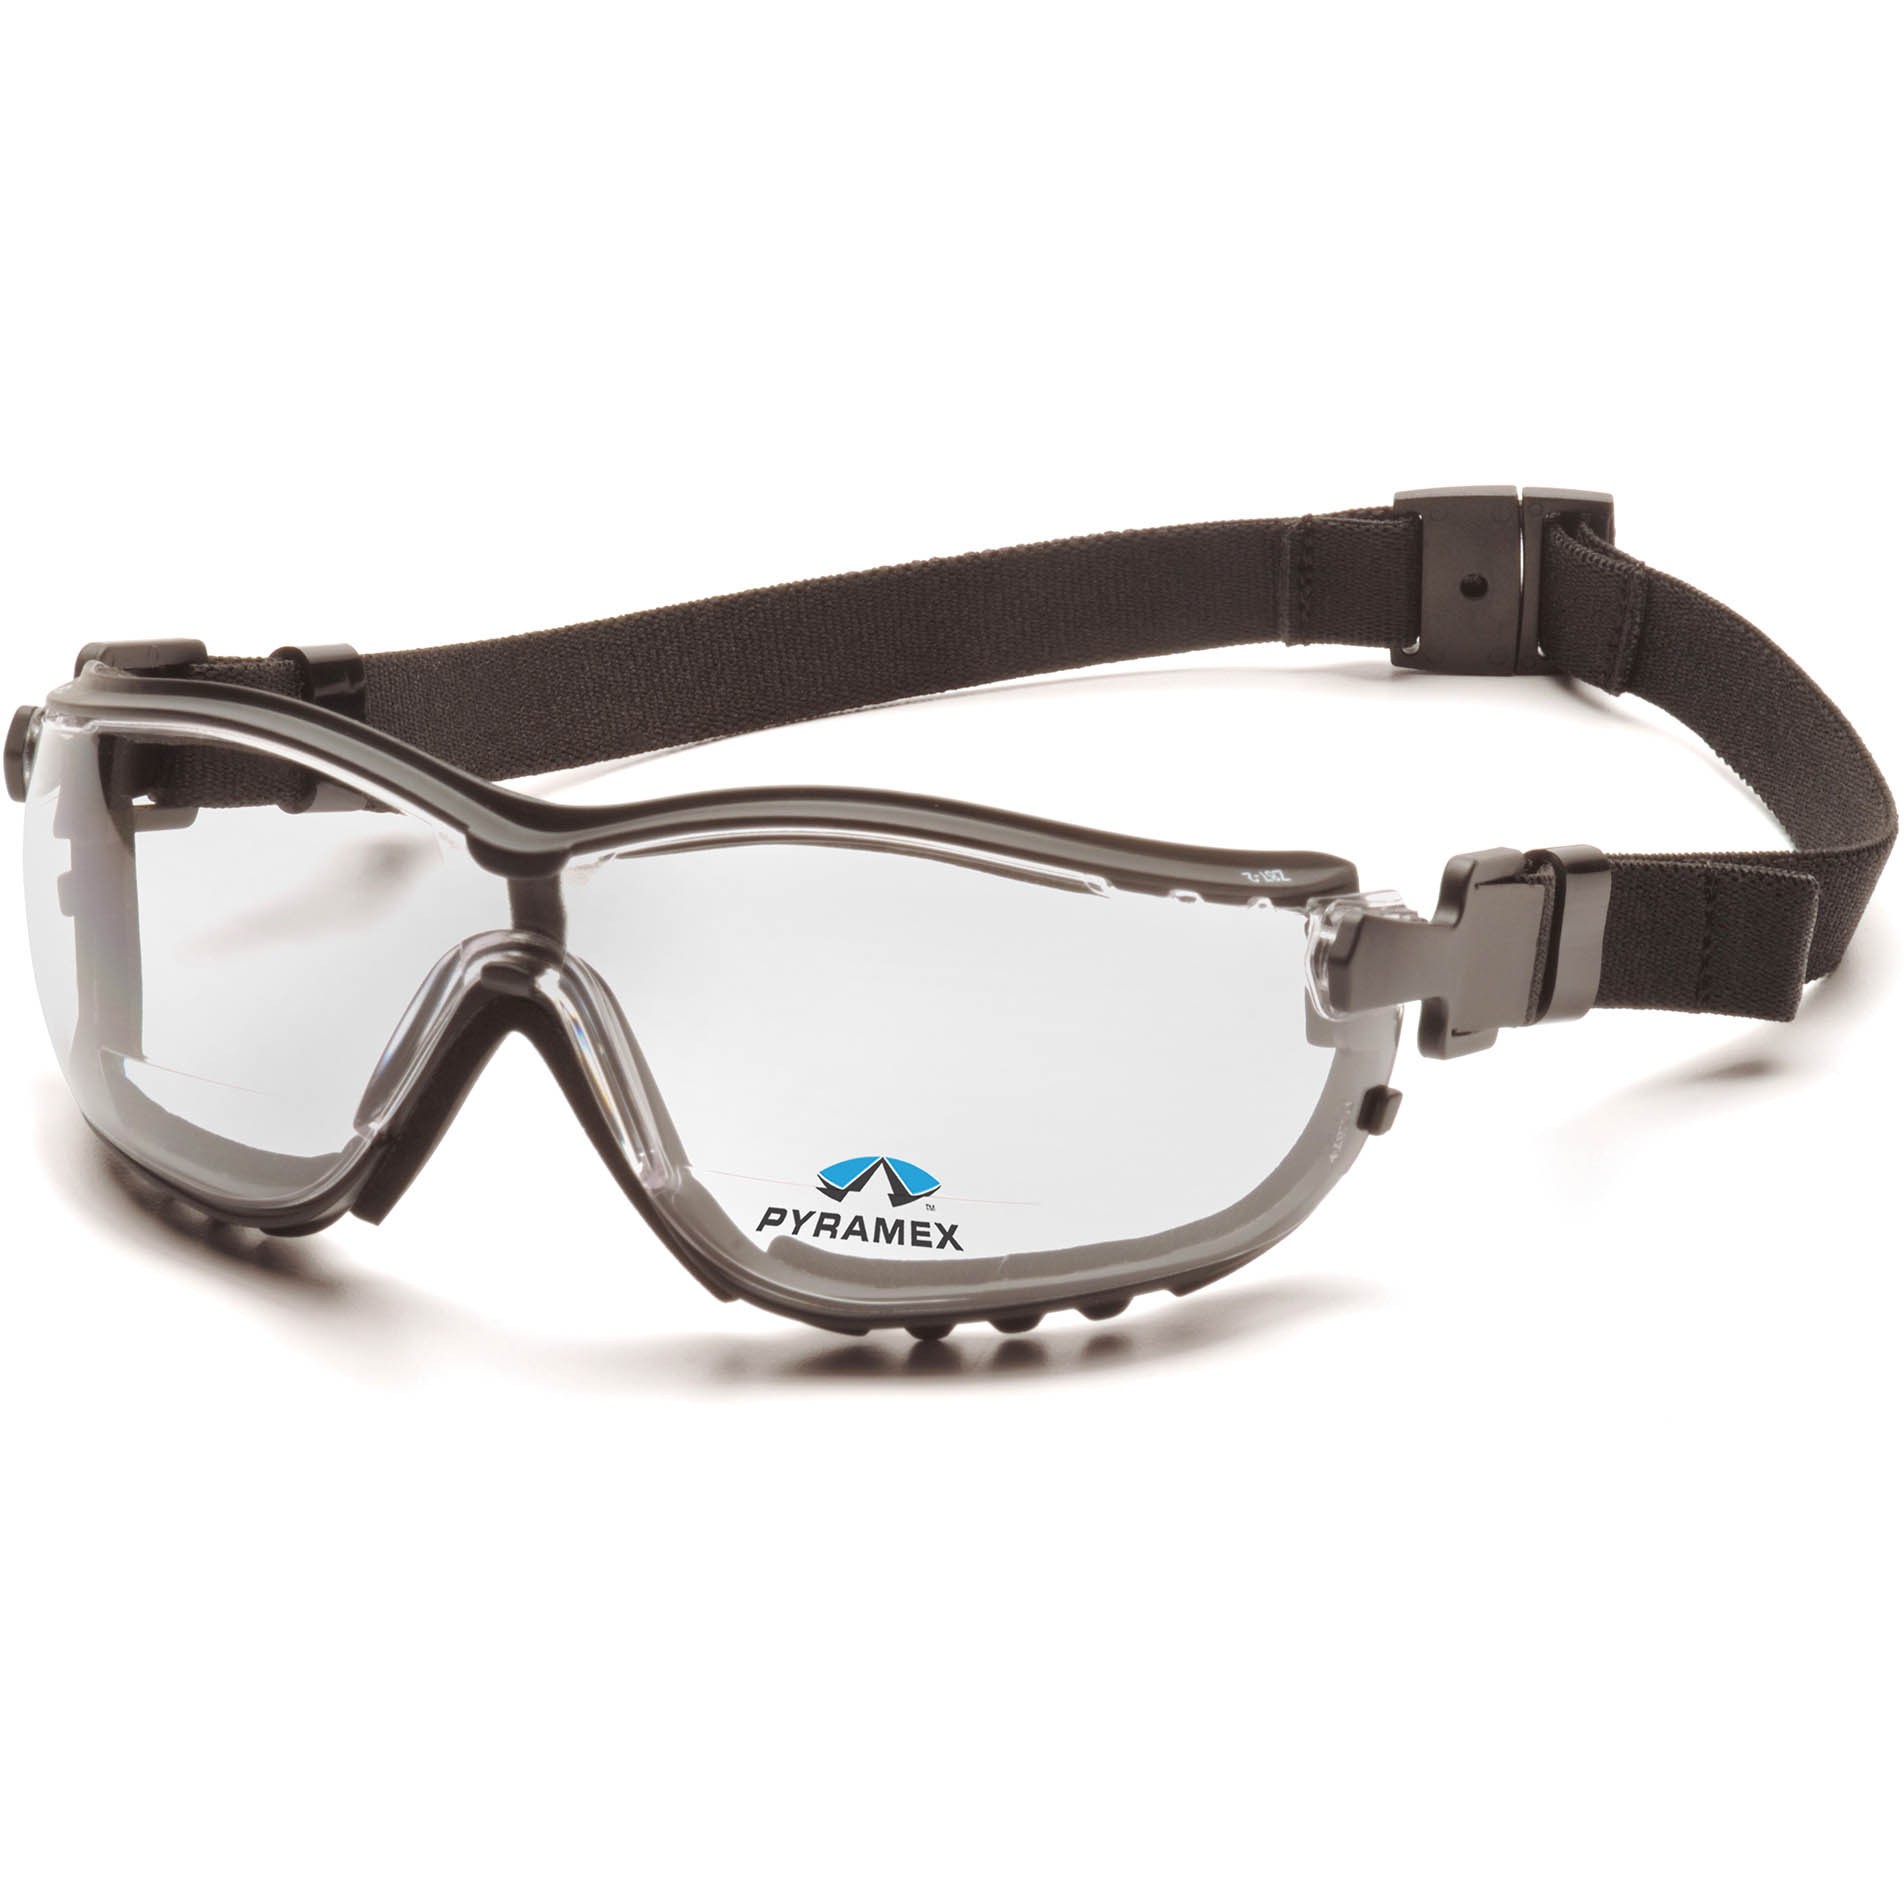 Pyramex V2 Readers Safety Eyewear Gray 1.5 Lens With Black Frame 